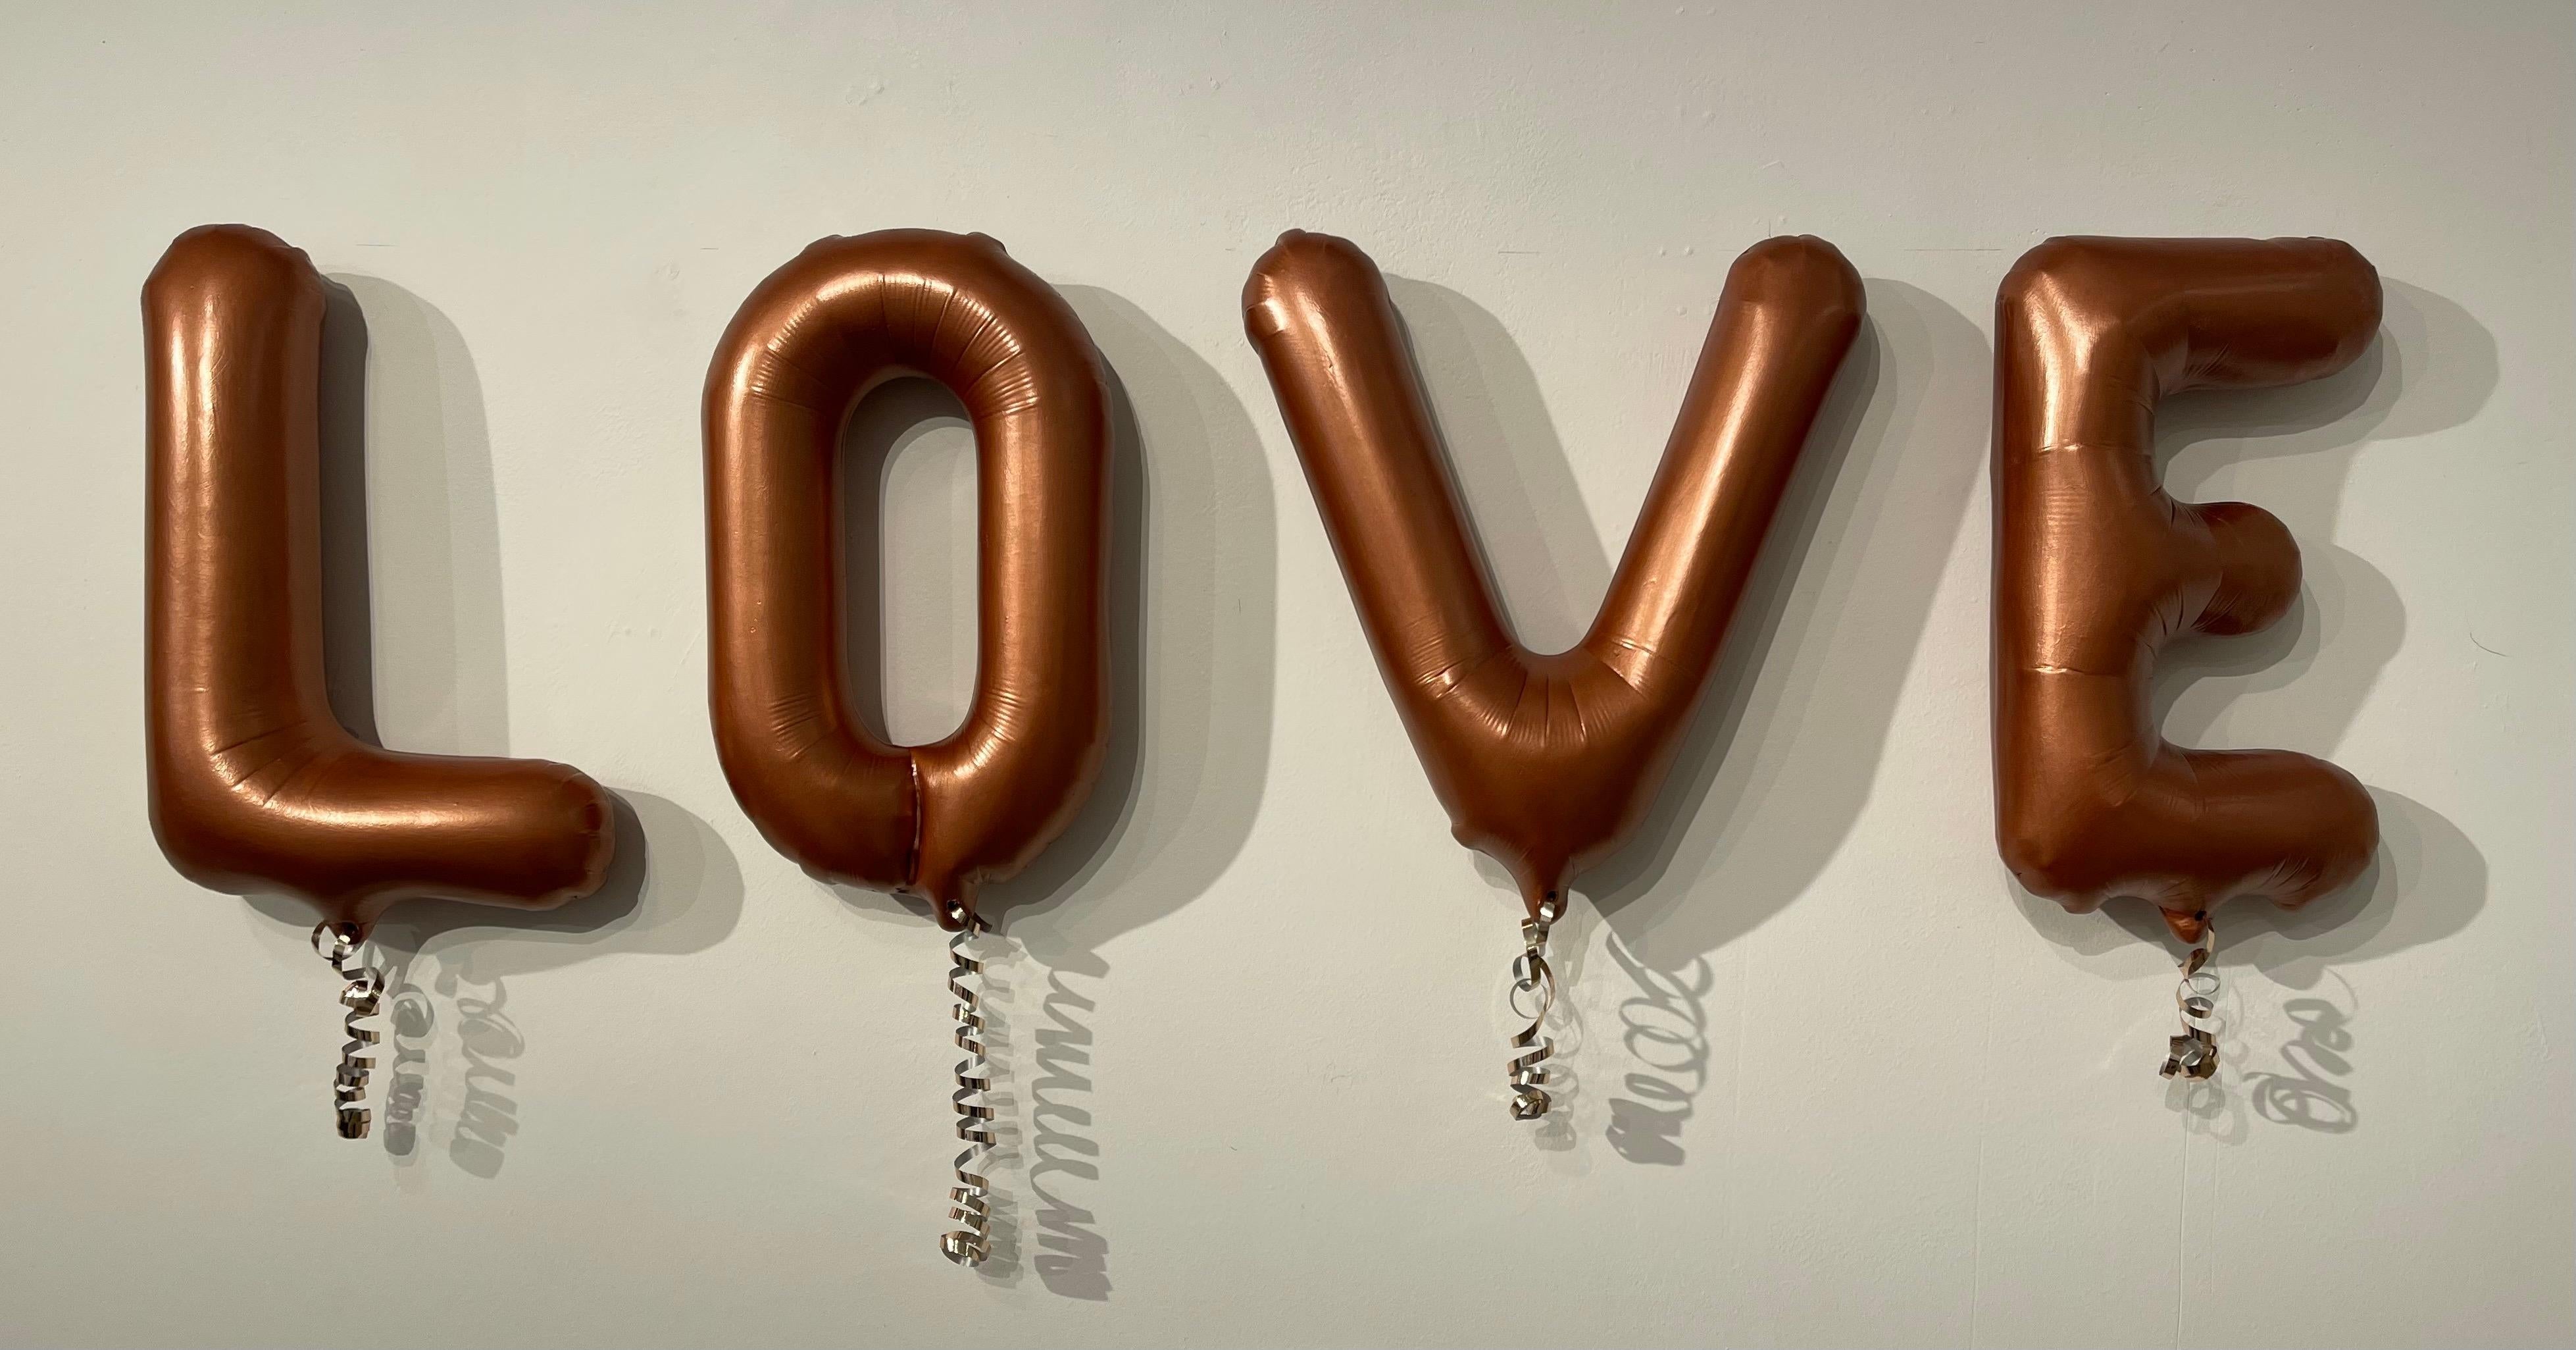 Nina Jun Still-Life Sculpture - LOVE - Copper